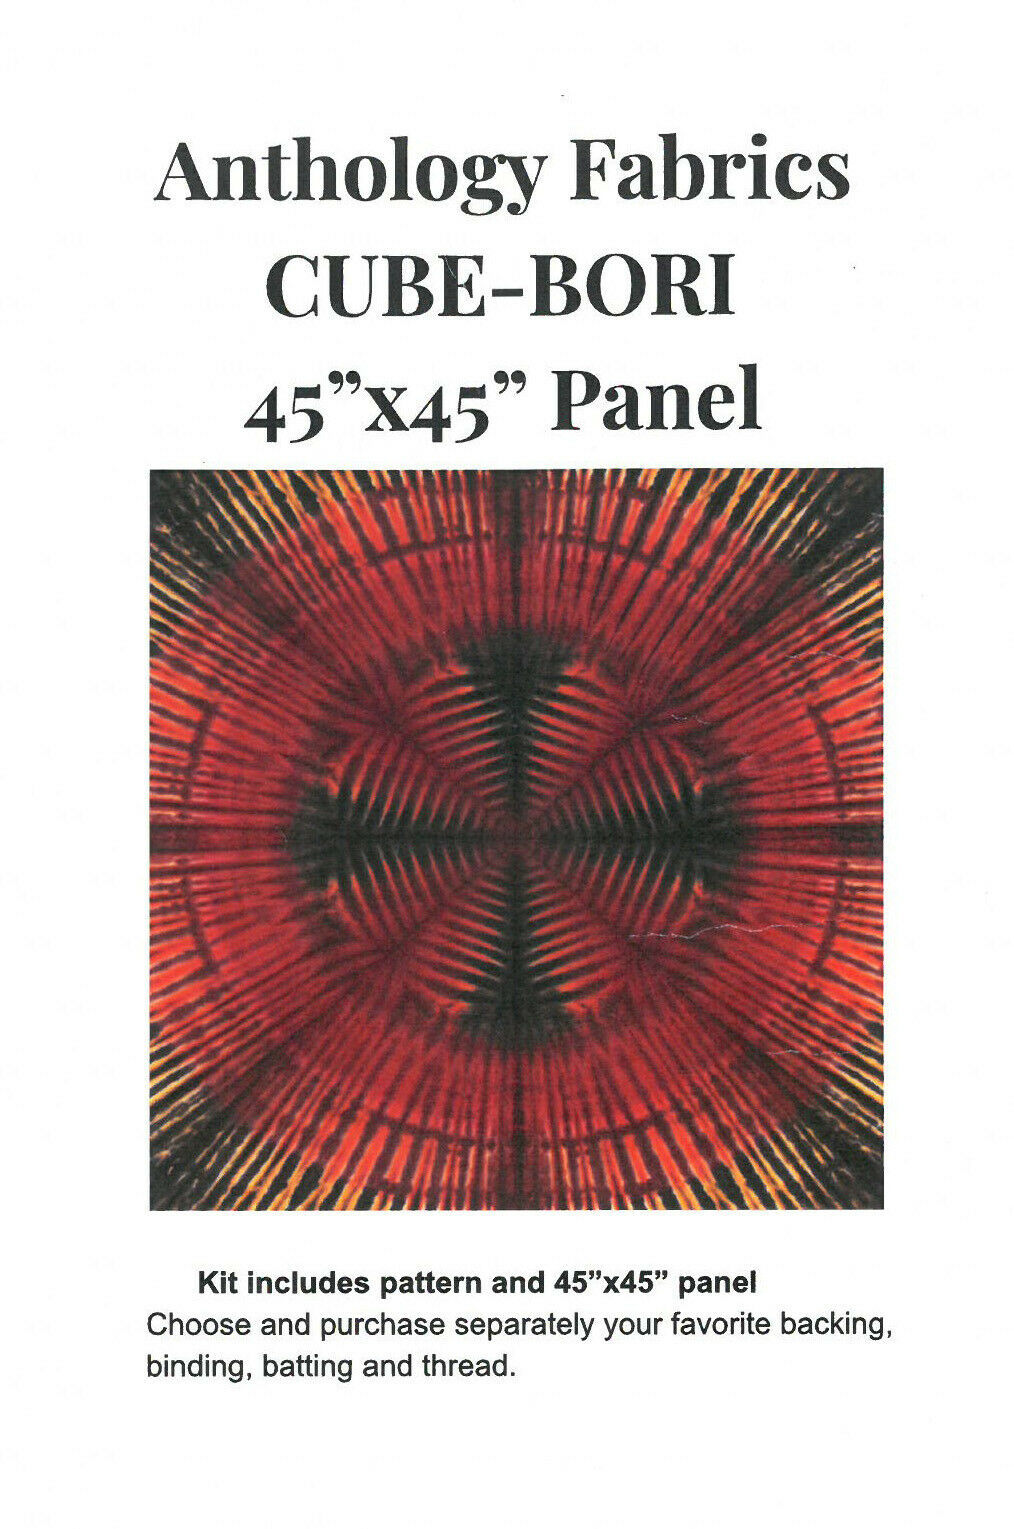 Fabric Kit - Cube-Bori Anthology Fabrics 45" x 45" Panel Quilting Kit M421.13 - $14.97